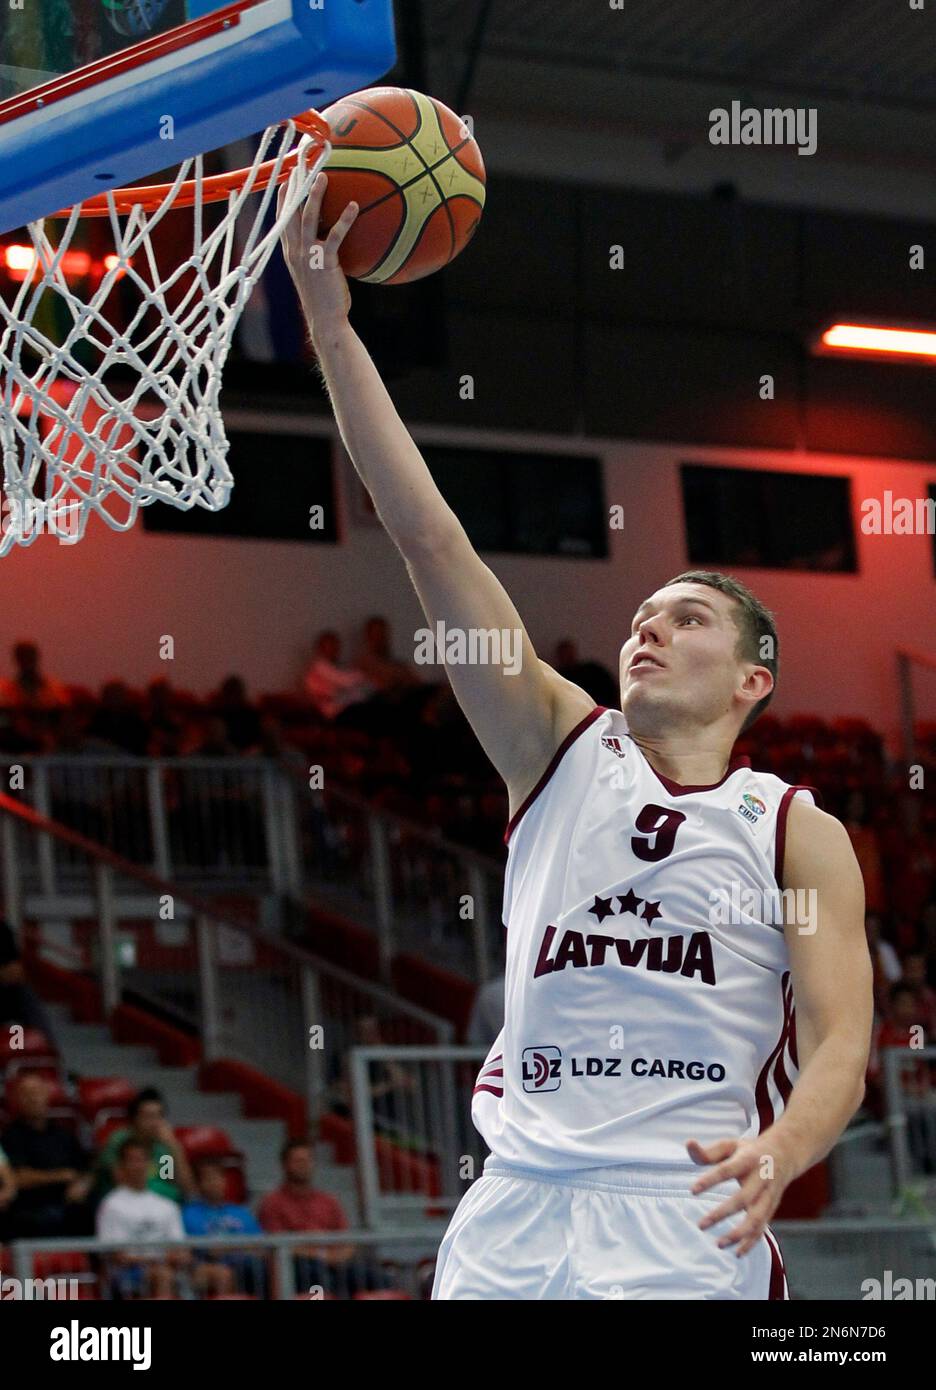 Latvias Dairis Bertans dunks a ball during their EuroBasket European Basketball Championship Group B match against Macedonia, in Podmezakla Arena, in Jesenice, Slovenia, Monday, Sept